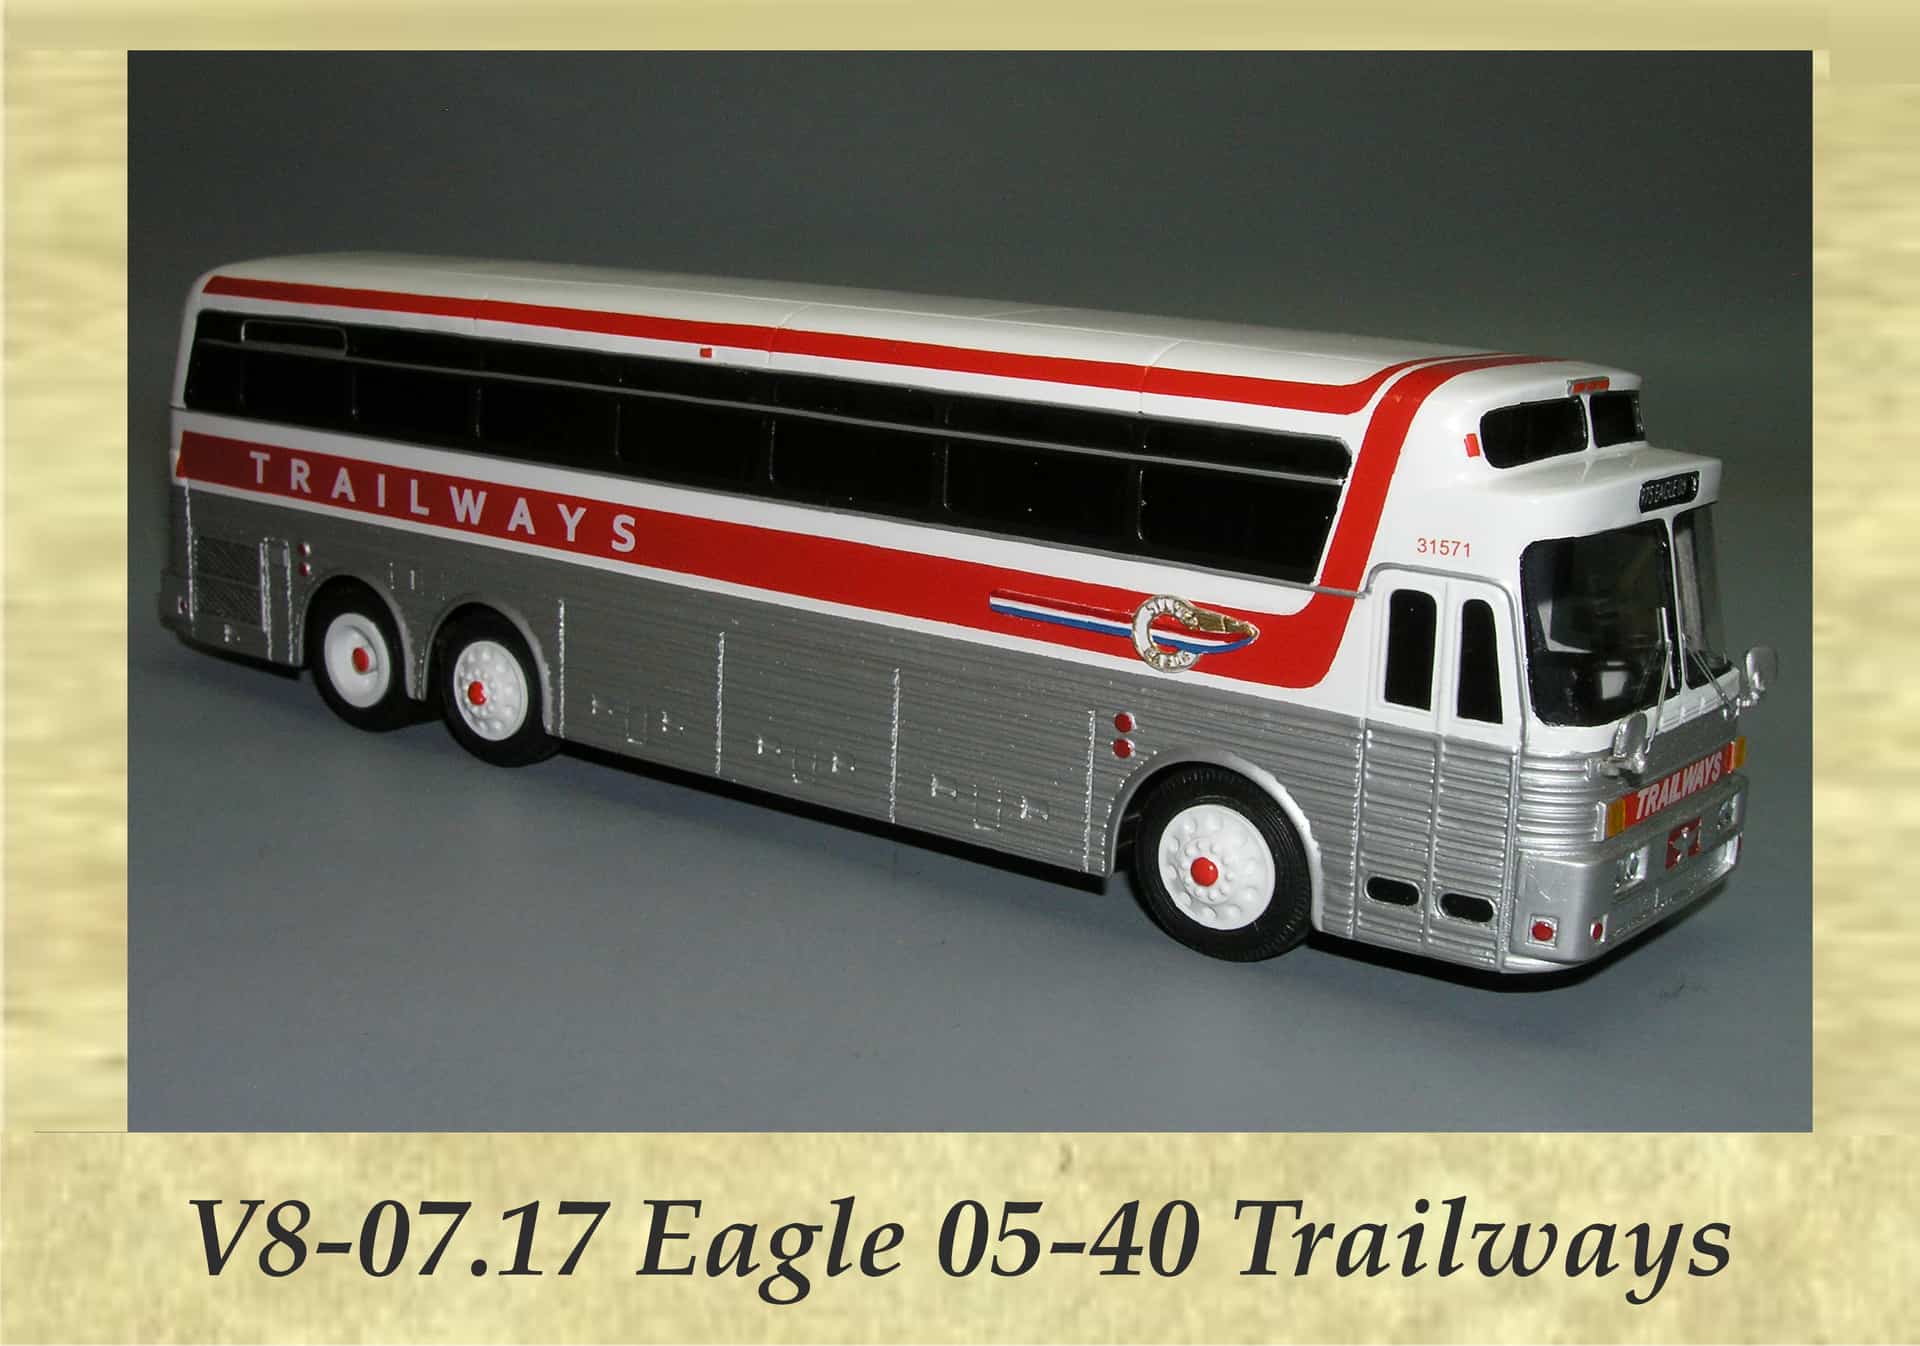 V8-07.17 Eagle 05-40 Trailways